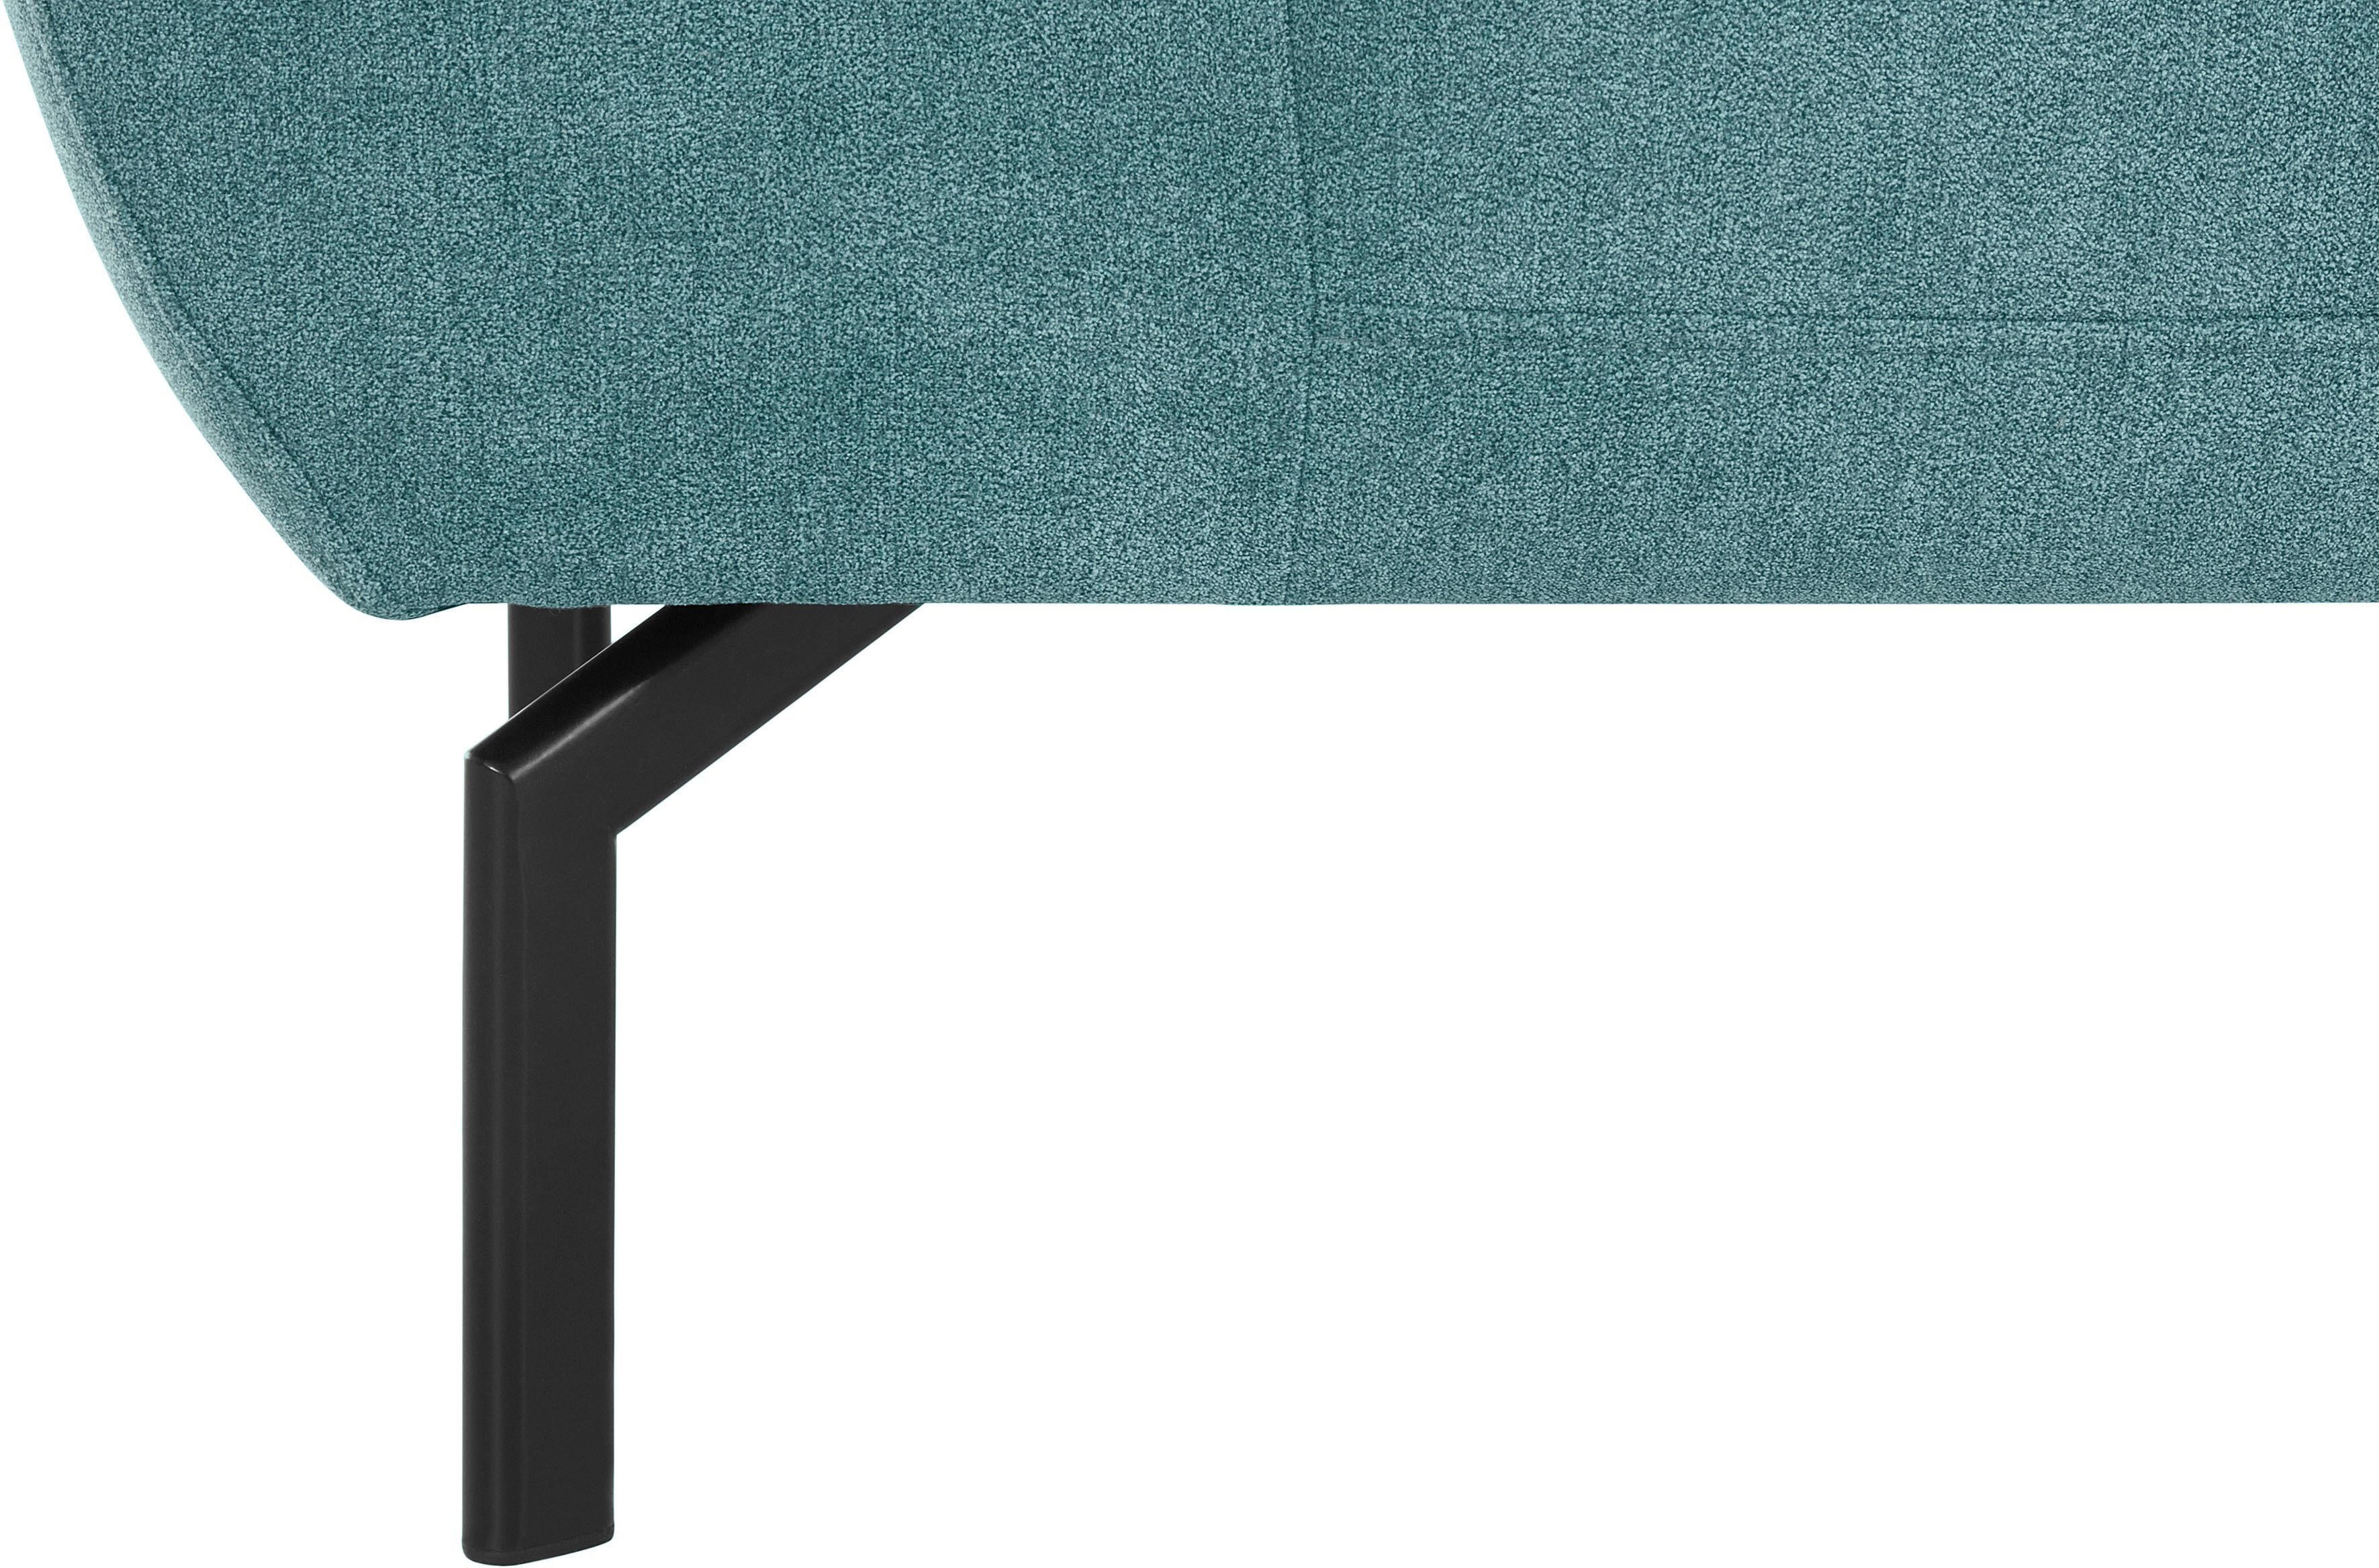 Rückenverstellung, Places Lederoptik of mit Sessel in Luxus, Luxus-Microfaser Style Trapino wahlweise